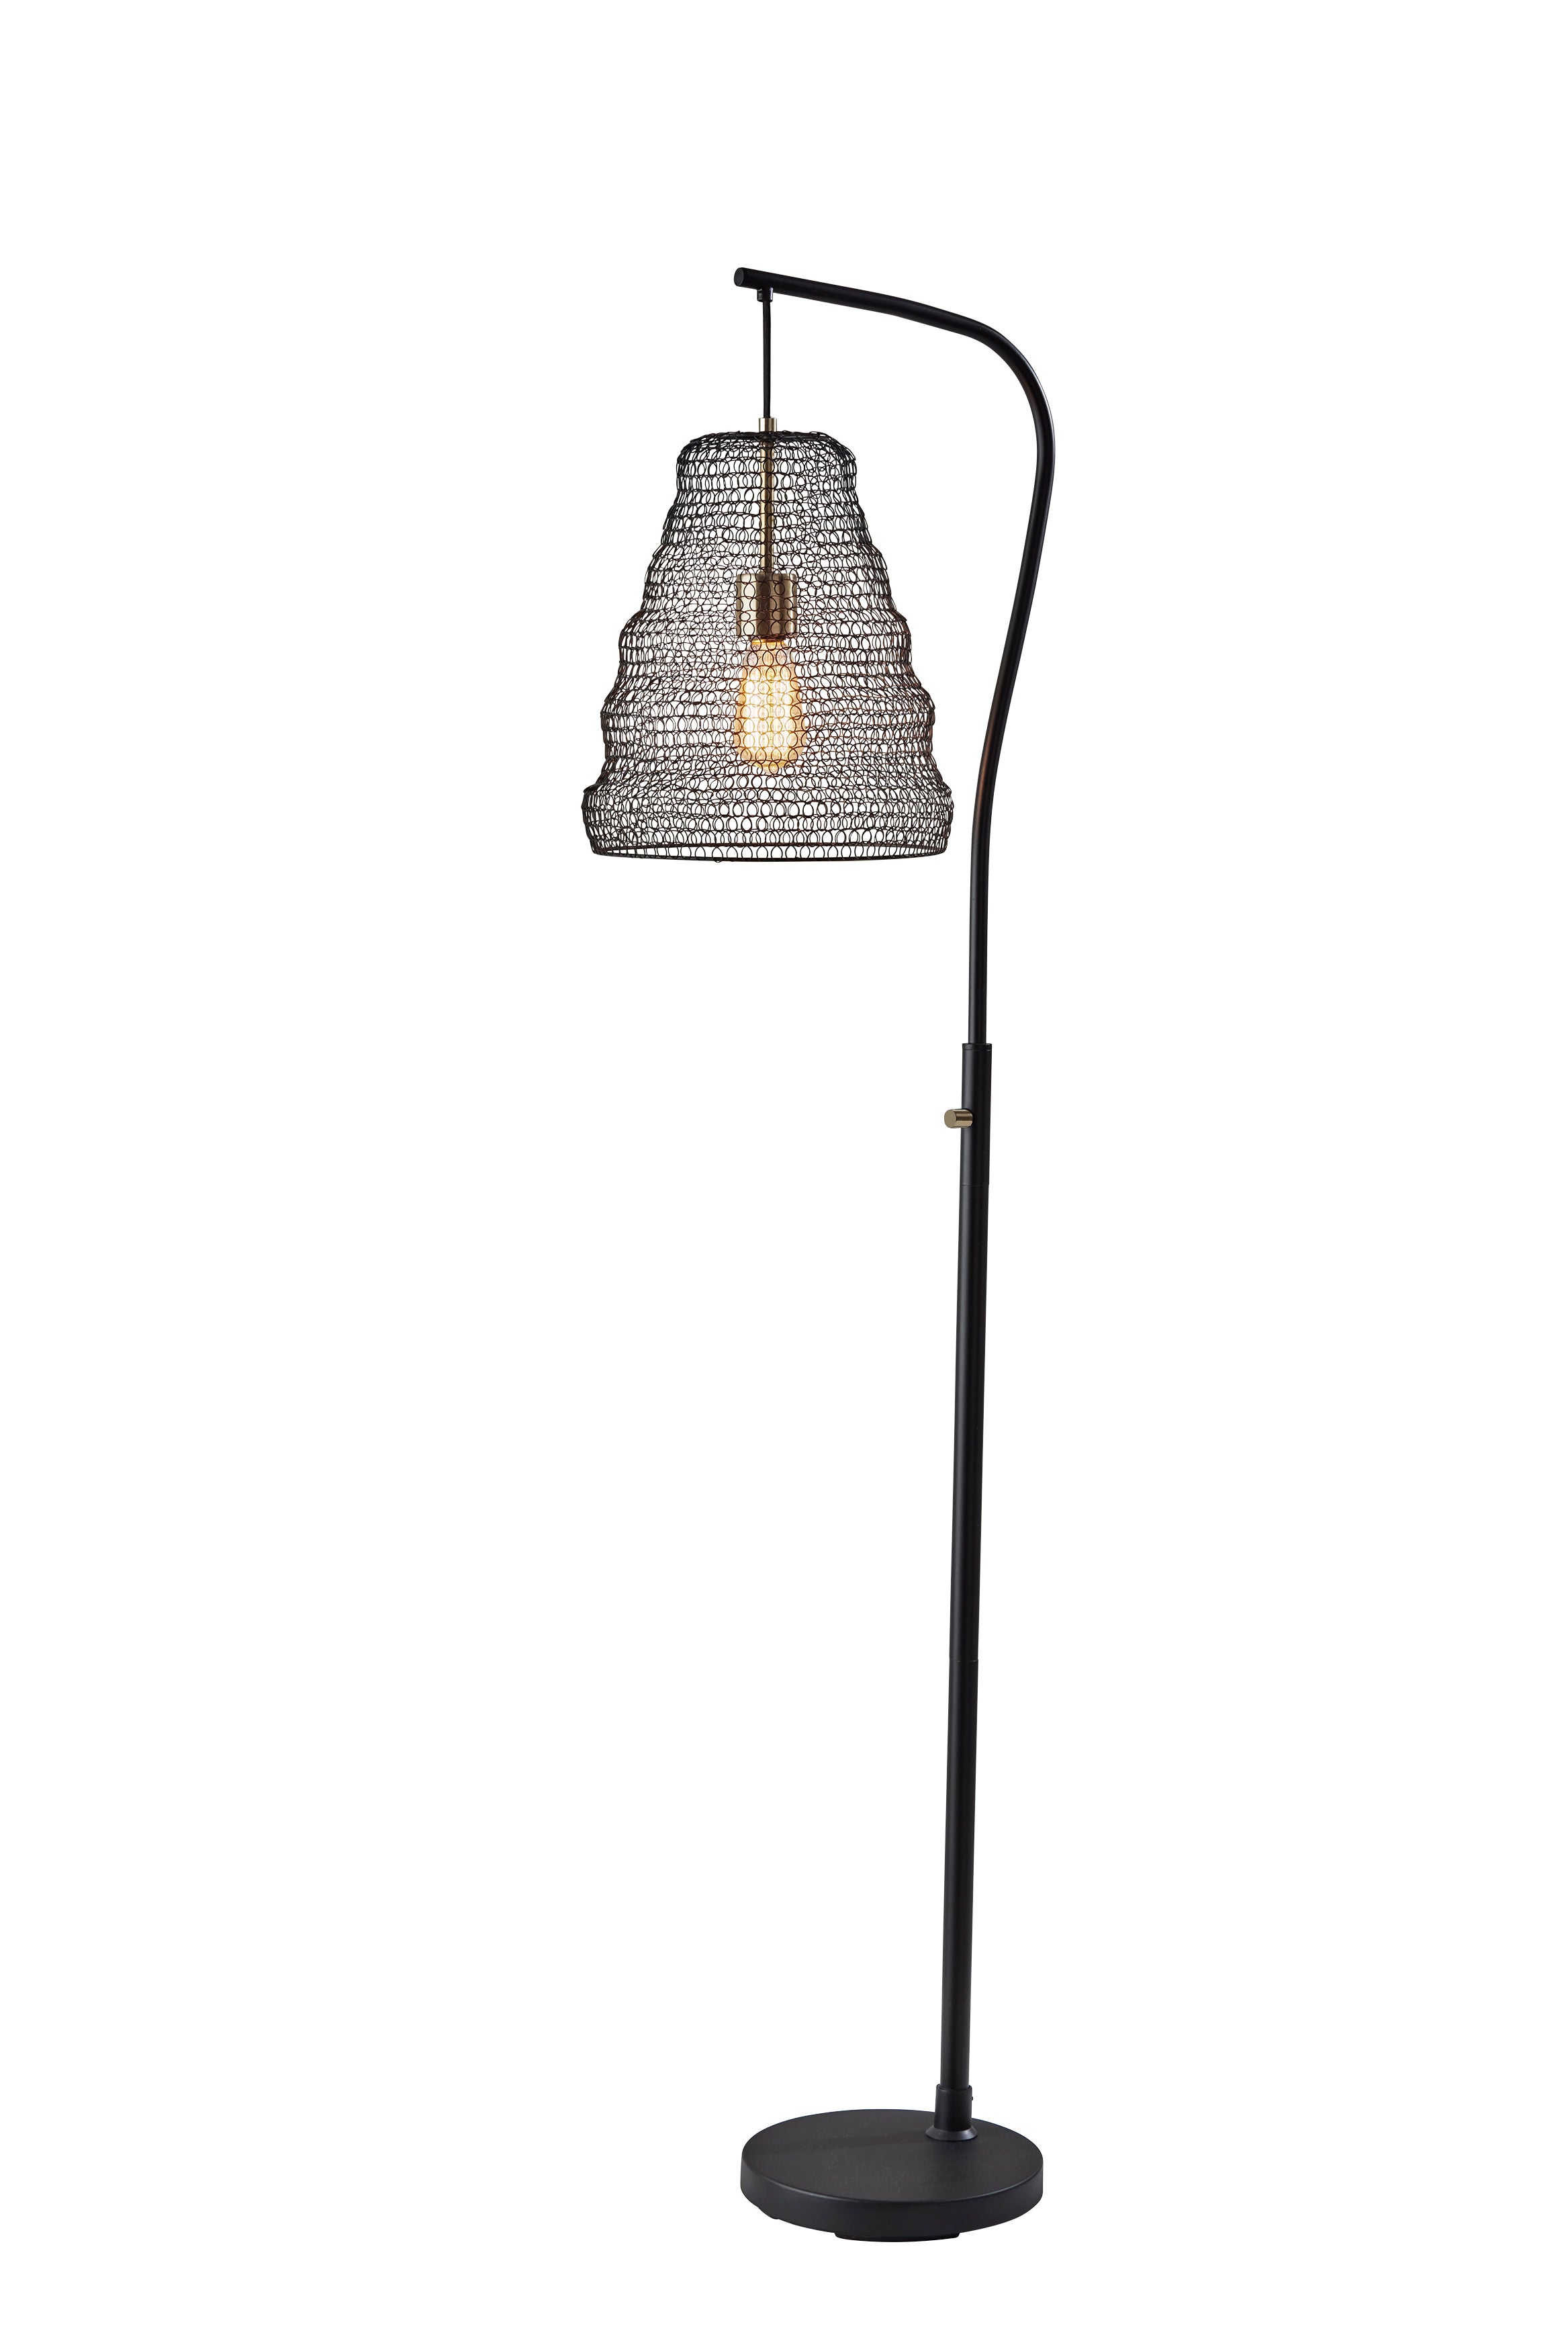 SHERIDAN Lampe sur pied Noir, Ors - 3569-01 | ADESSO